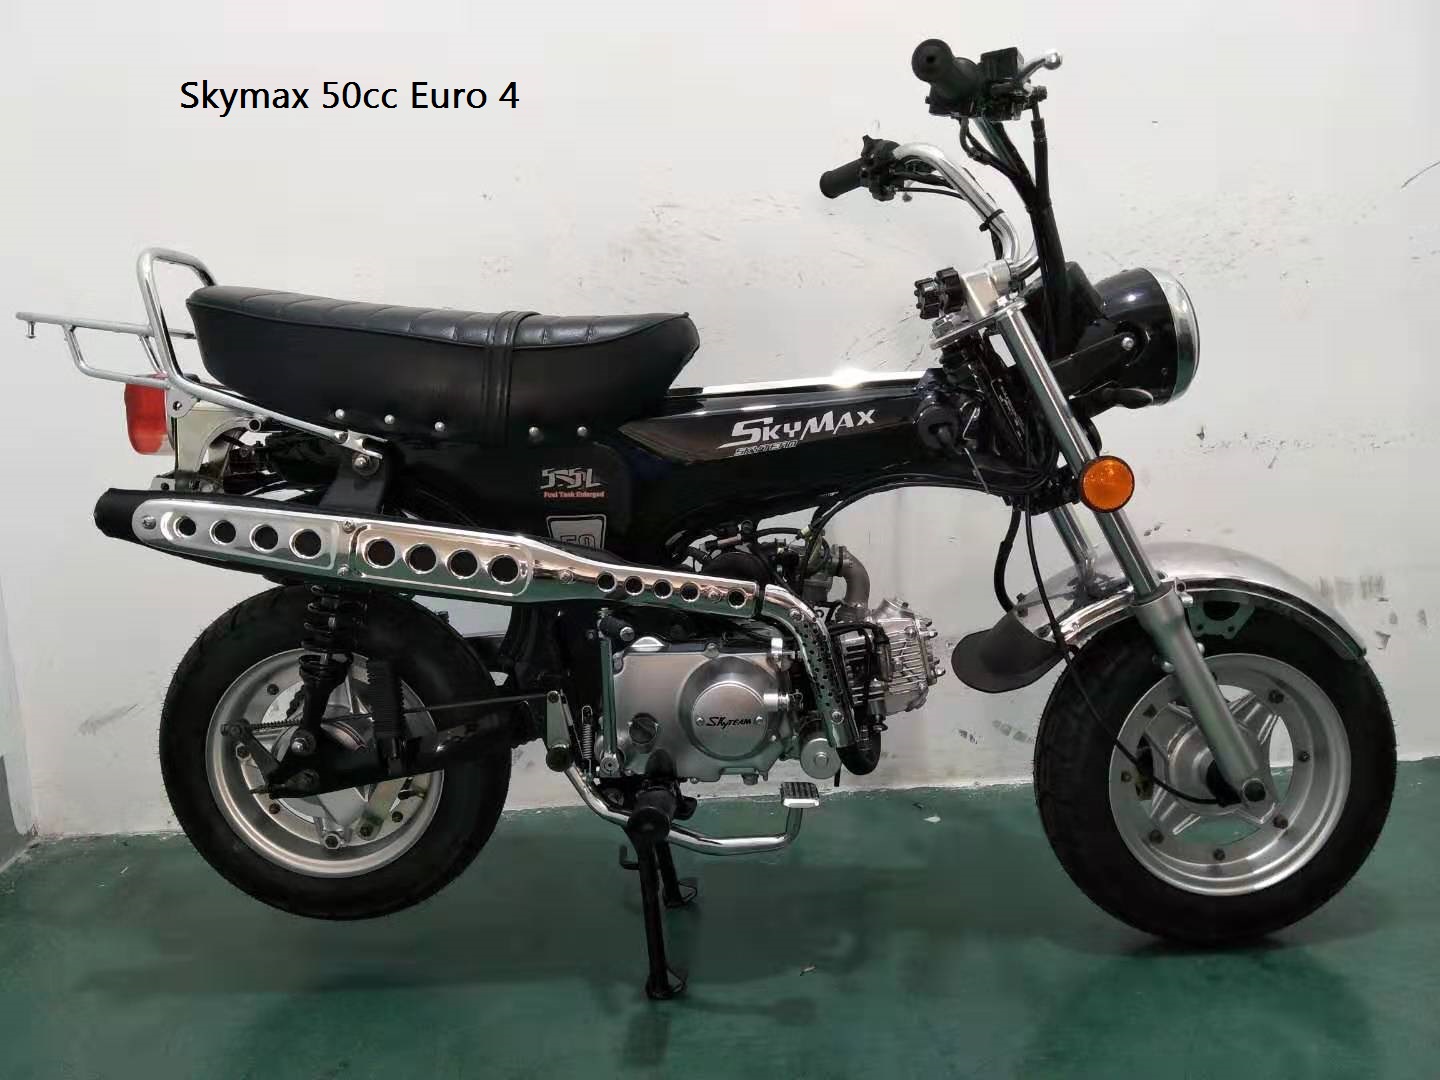 Skymax 50cc Euro 4